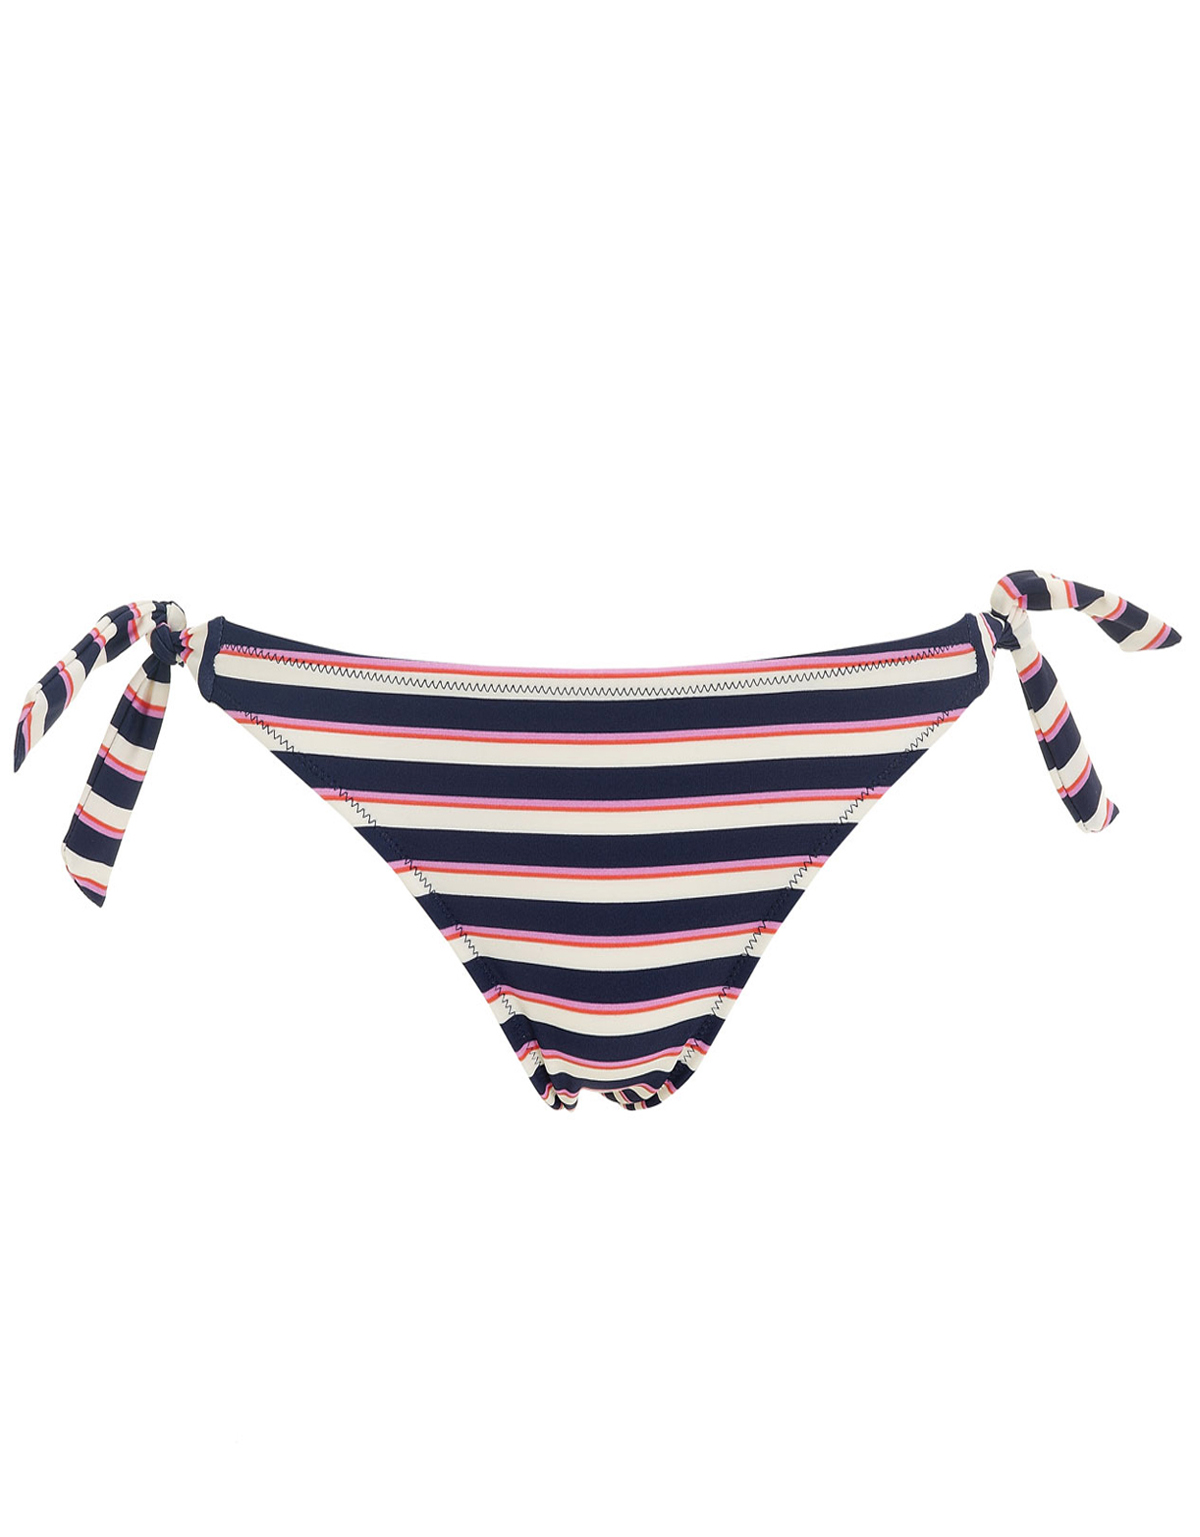 Accessor1ze NAVY Striped Tie Side Bikini Bottoms - Size 6 to 18